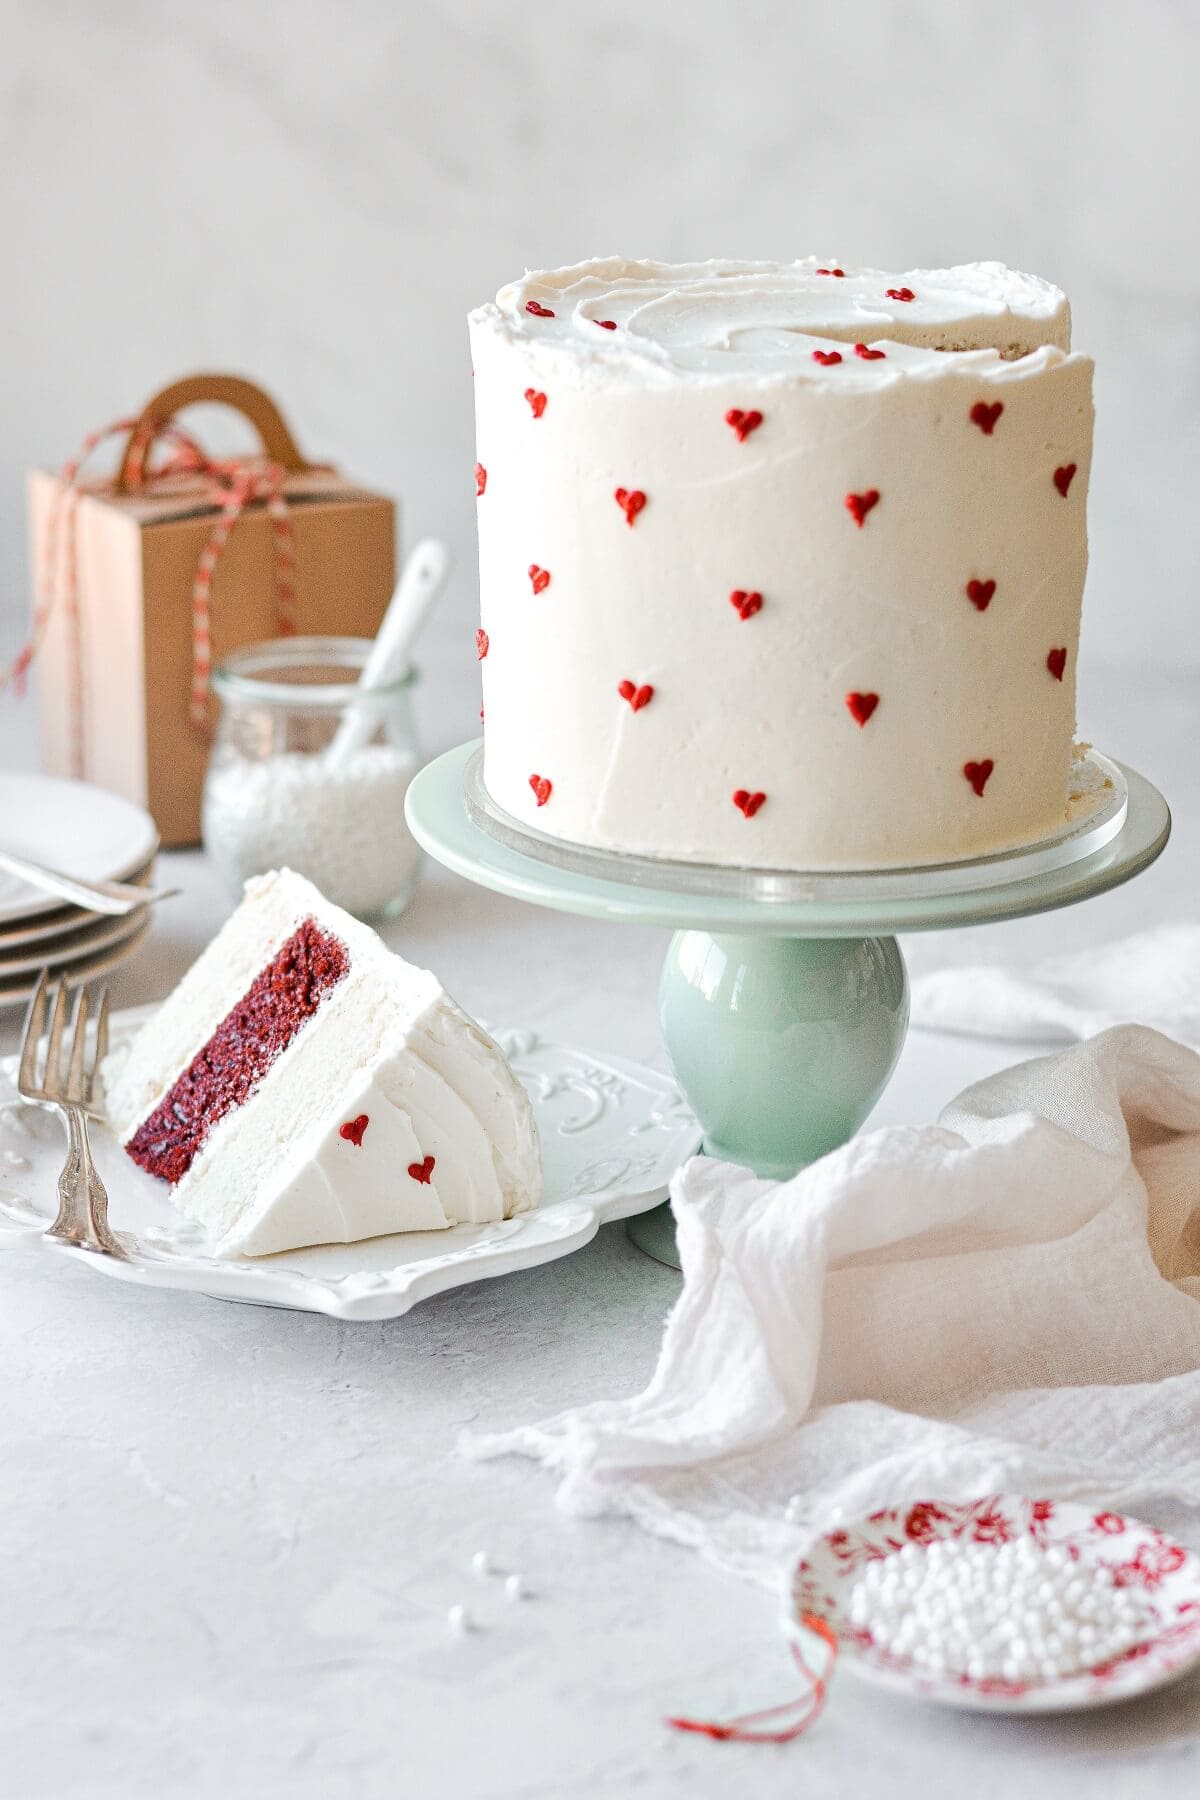 21 Simple Yet Impressive Kid Birthday Cake Ideas - XO, Katie Rosario-sgquangbinhtourist.com.vn